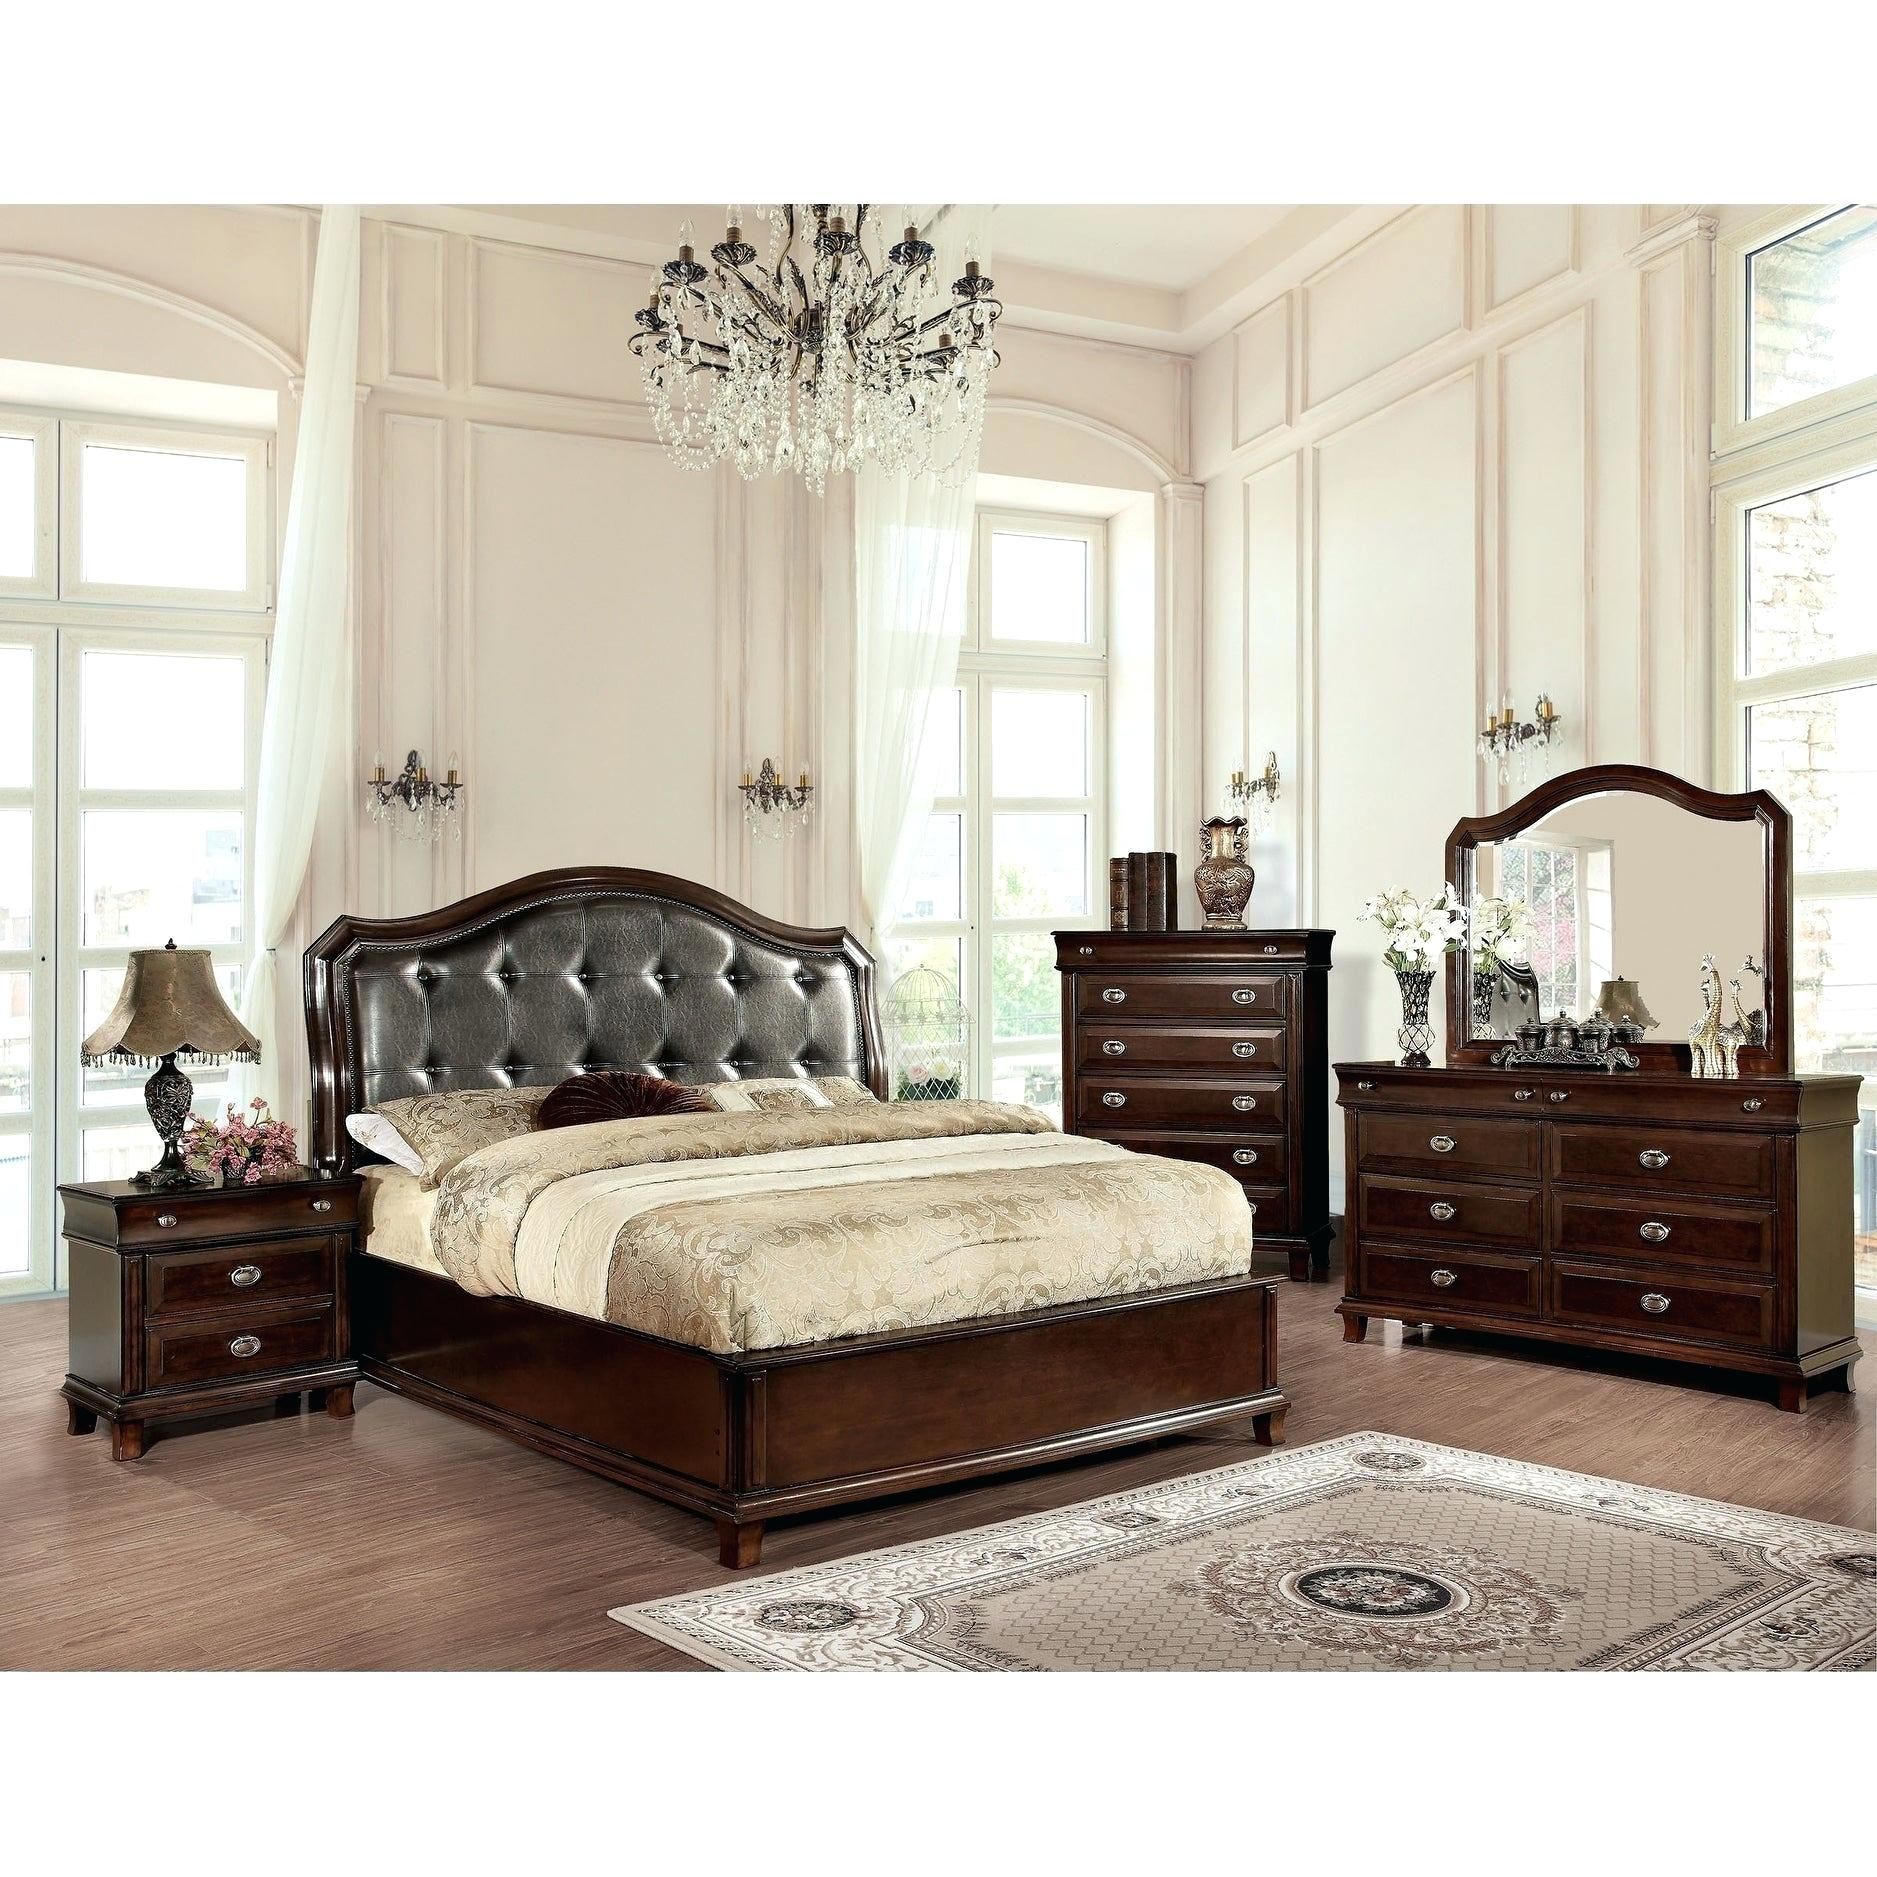 Best Bedroom Furniture For The Money Saasflowco regarding dimensions 1877 X 1877